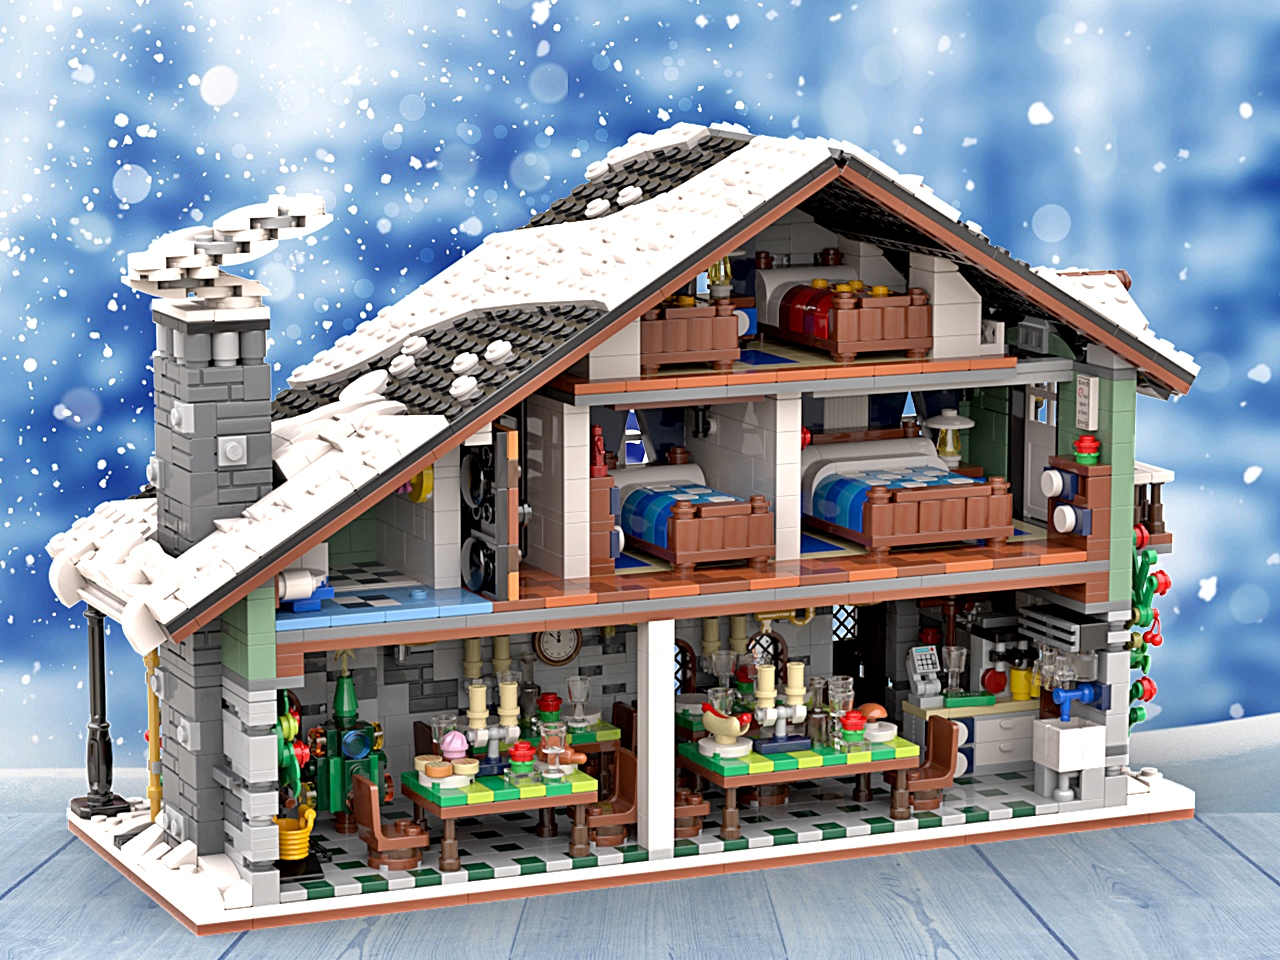 LEGO Bricklink 910004 Winter Chalet legamo.ch